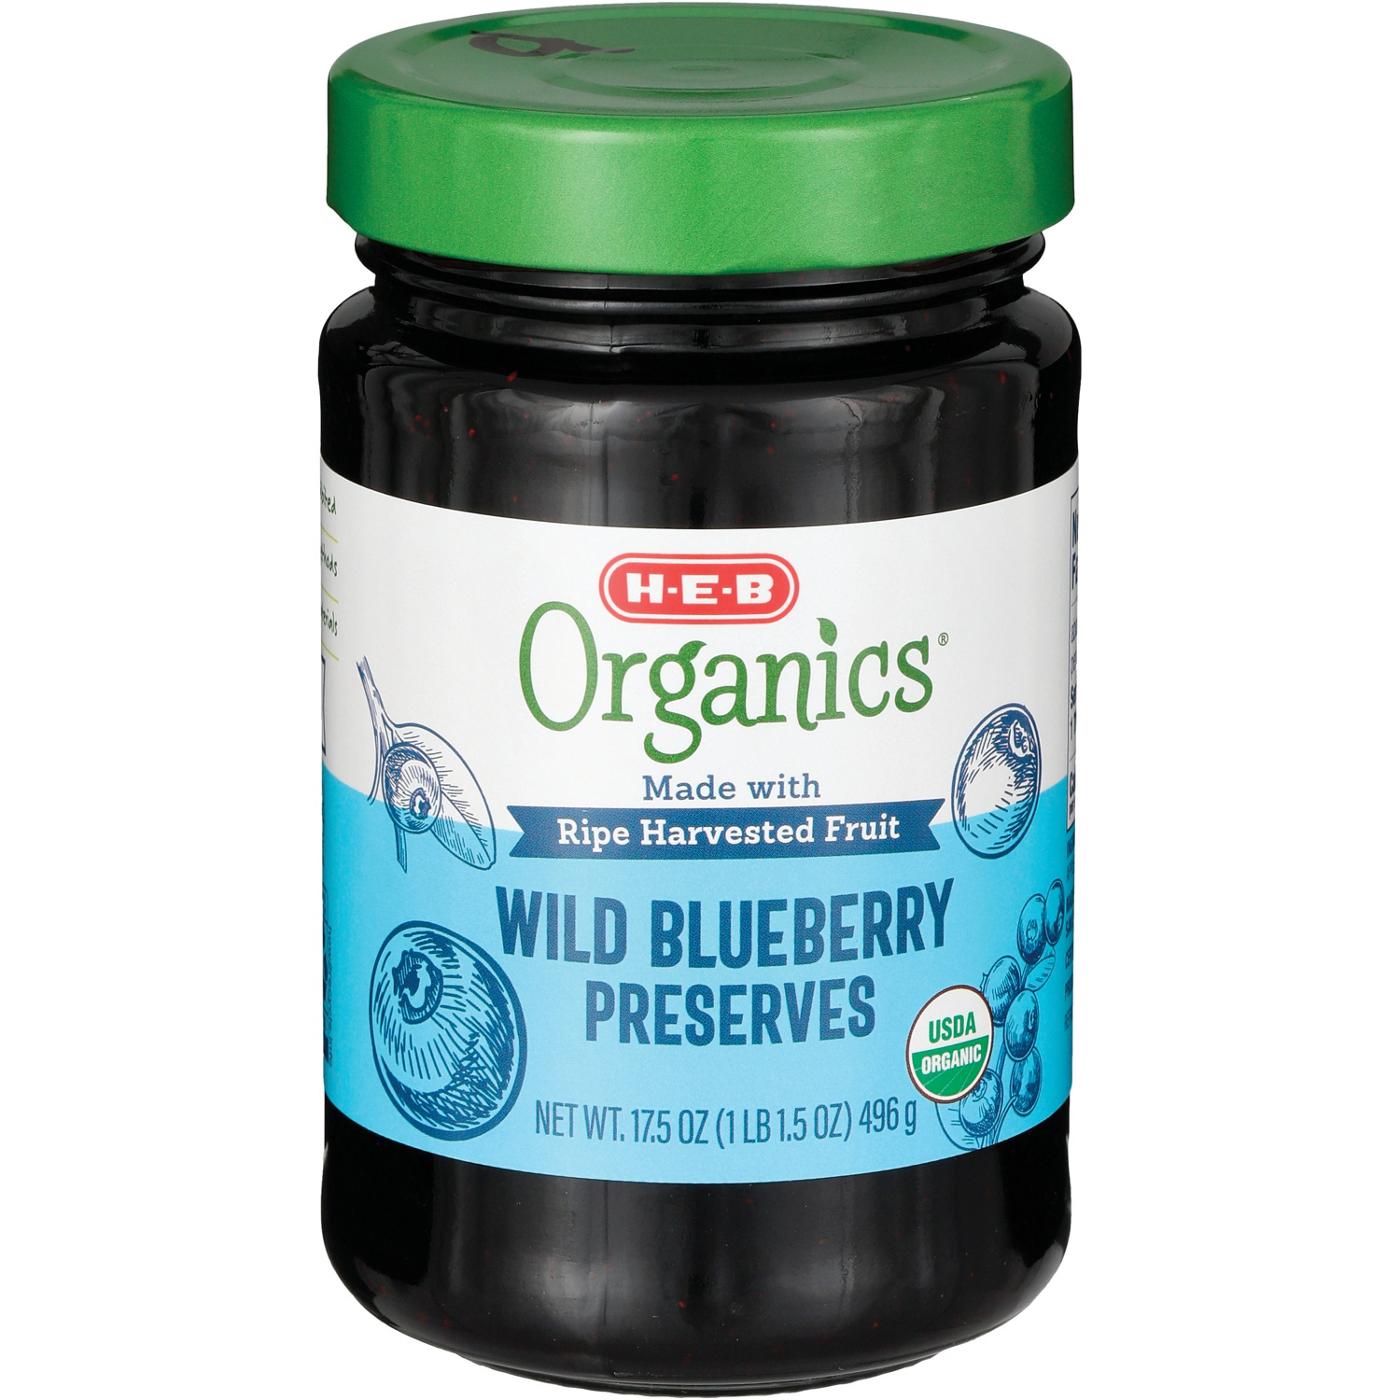 H-E-B Organics Wild Blueberry Preserves; image 2 of 2